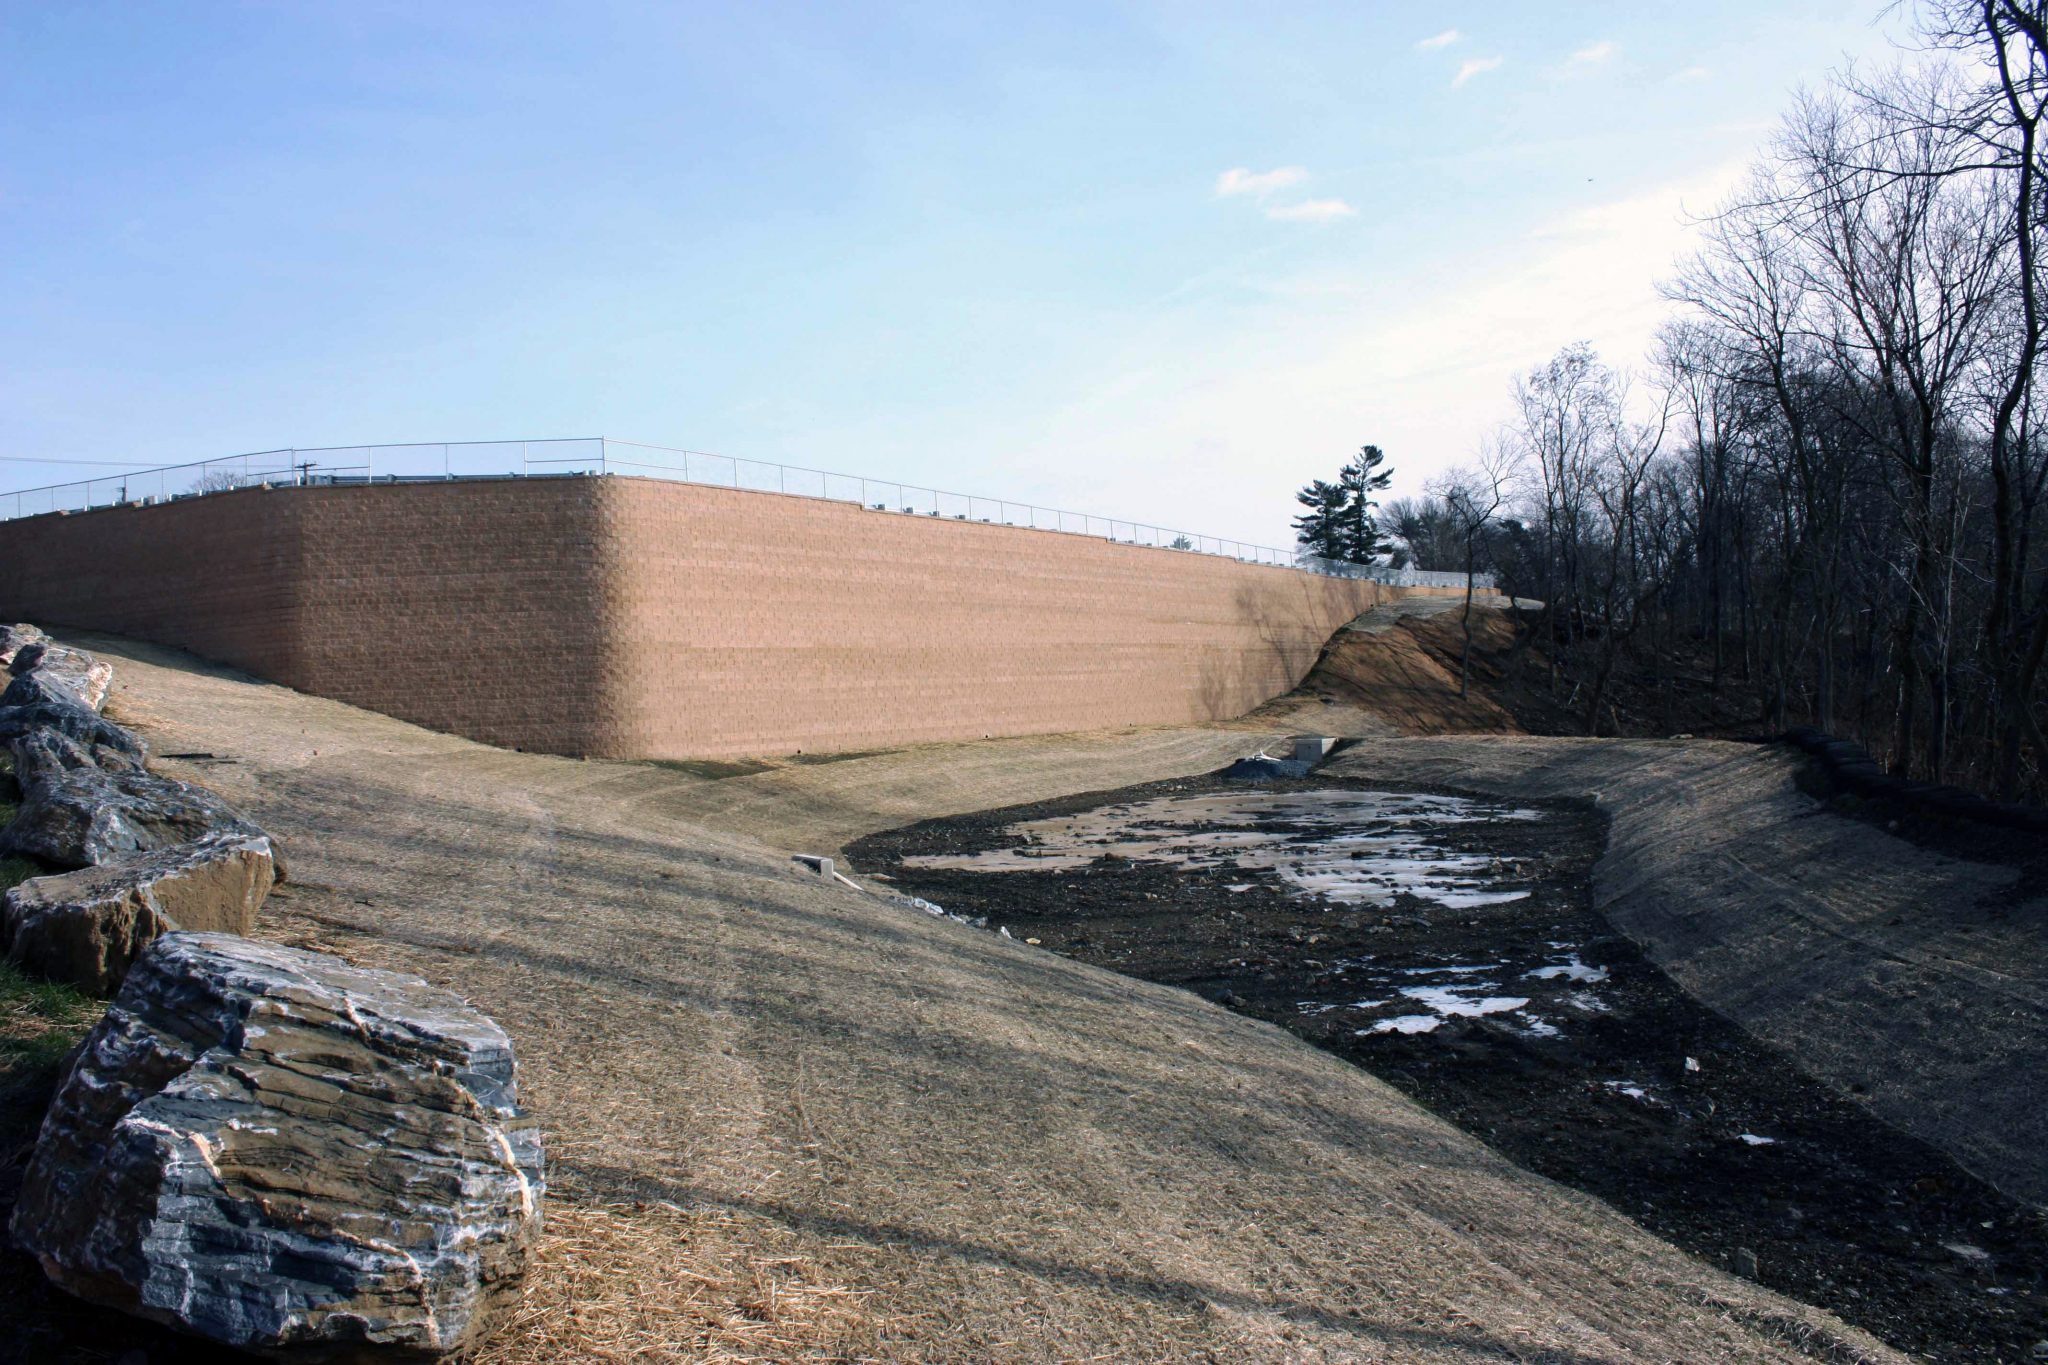 CornerStone Retaining Wall Along Conestoga River, Lancaster, Pennsylvania